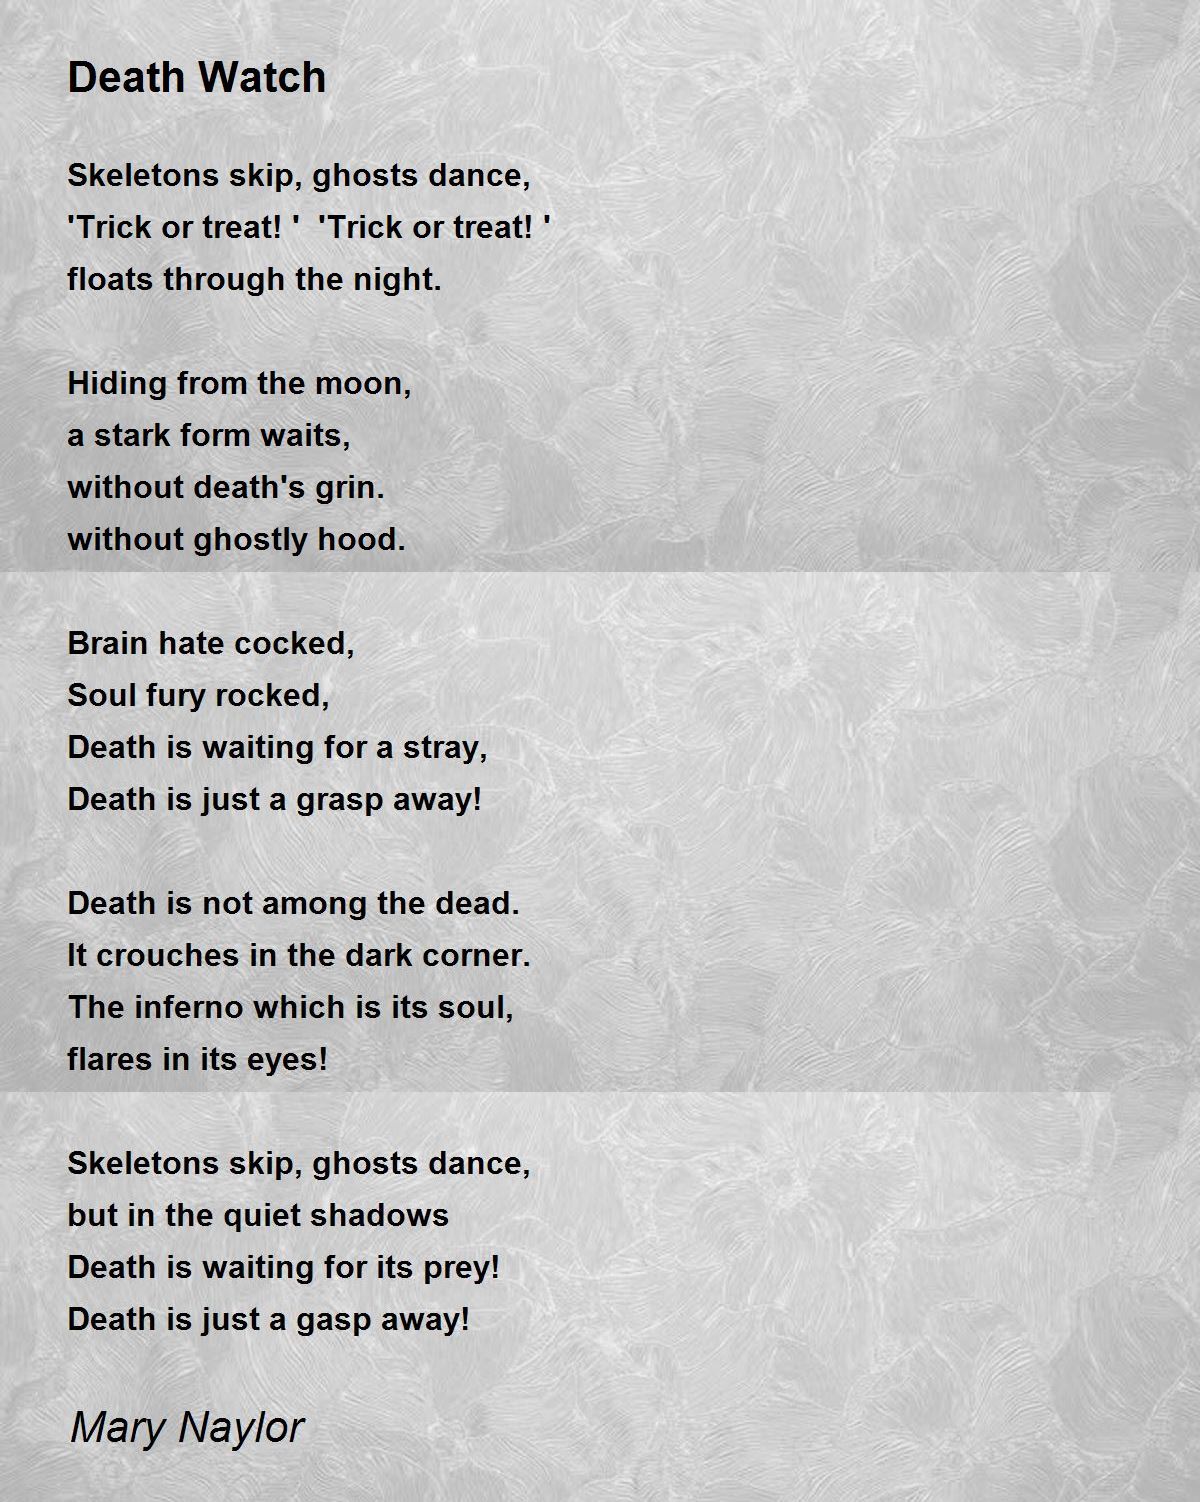 Death Watch - Death Watch Poem by Mary Naylor